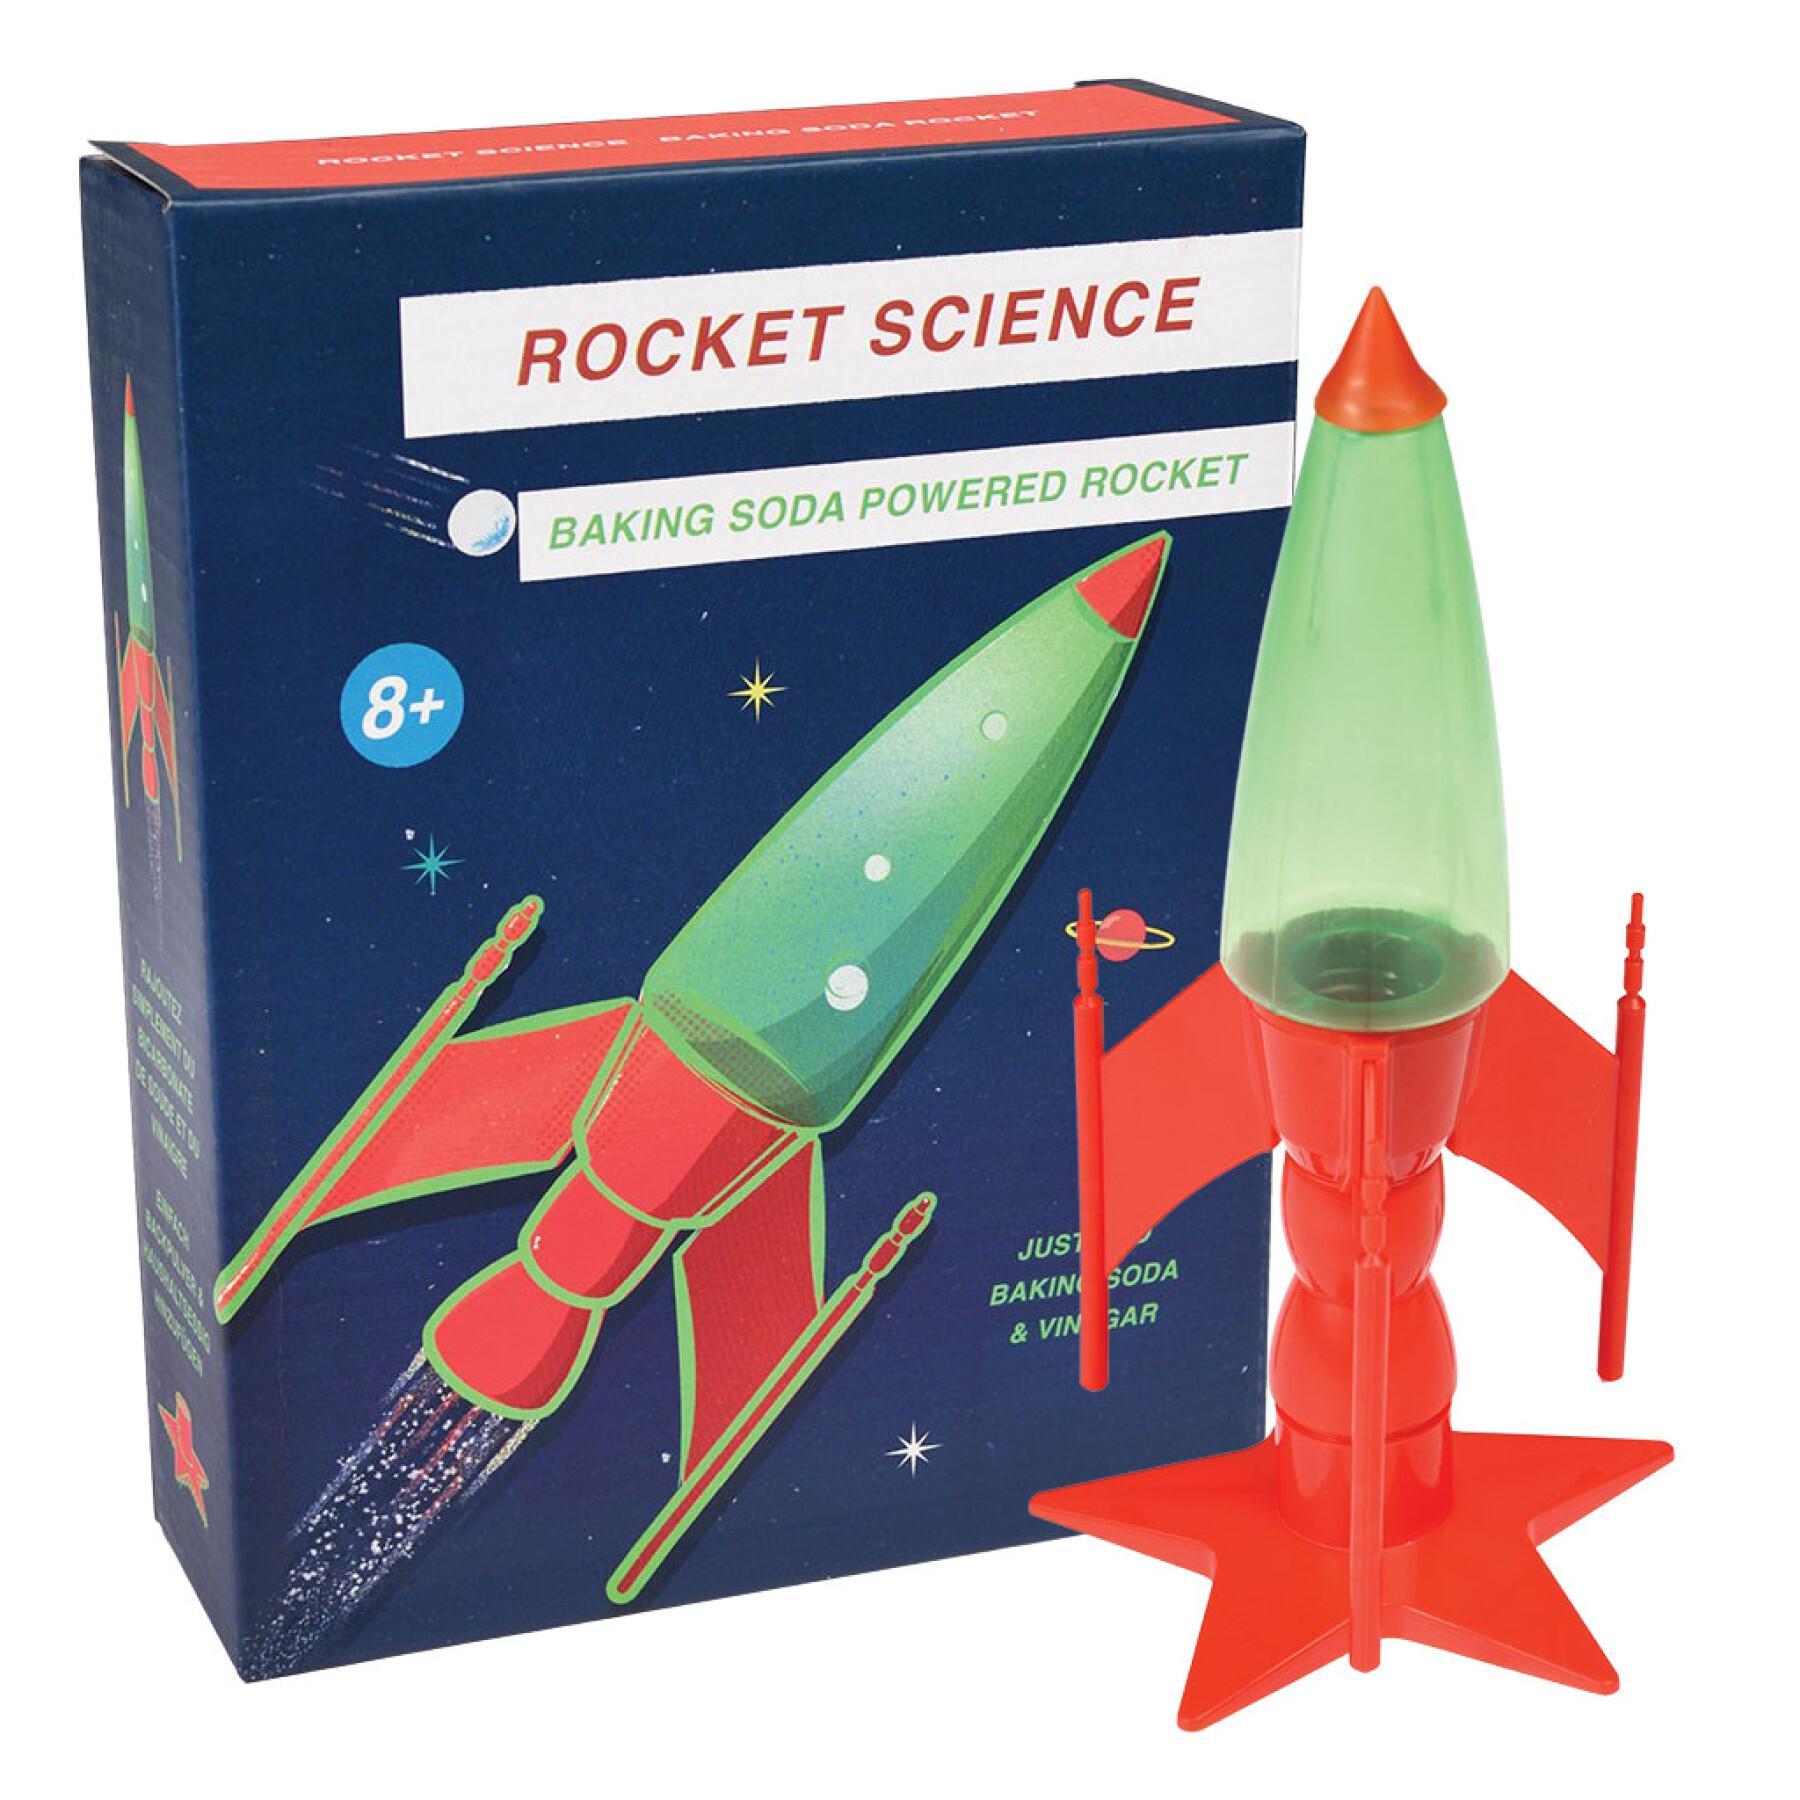 Space rocket to build Rex London